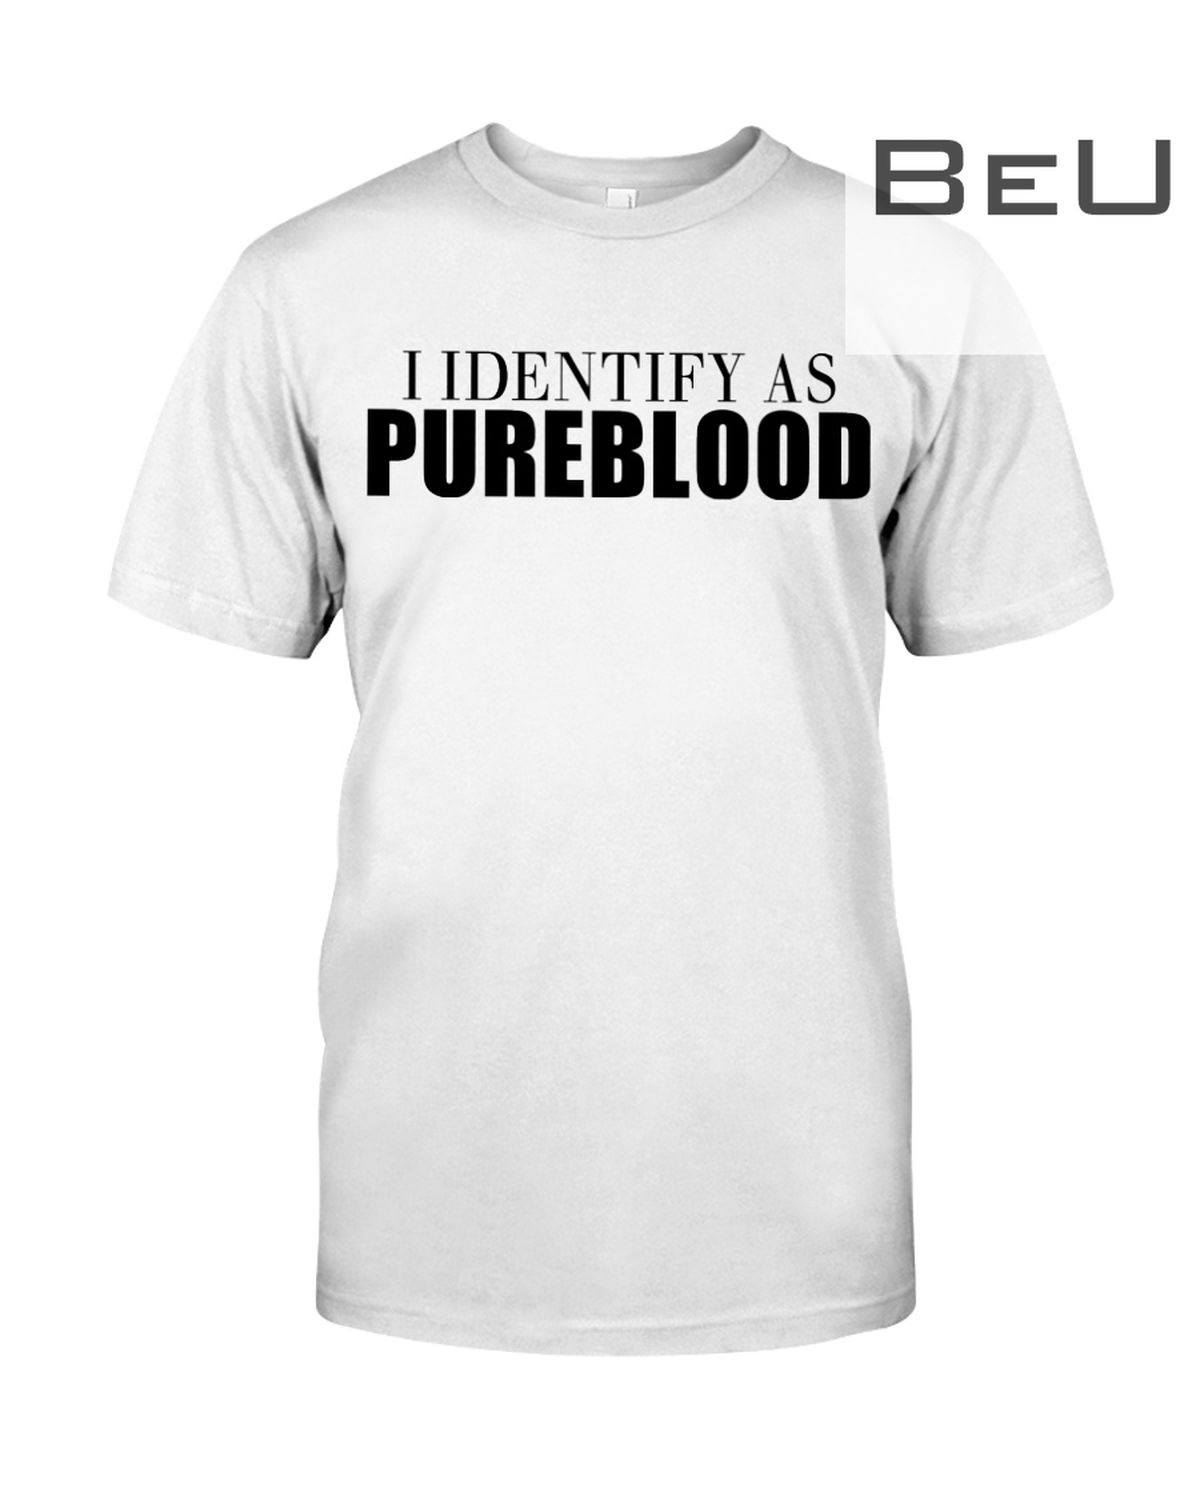 I Identify As Pureblood Shirt